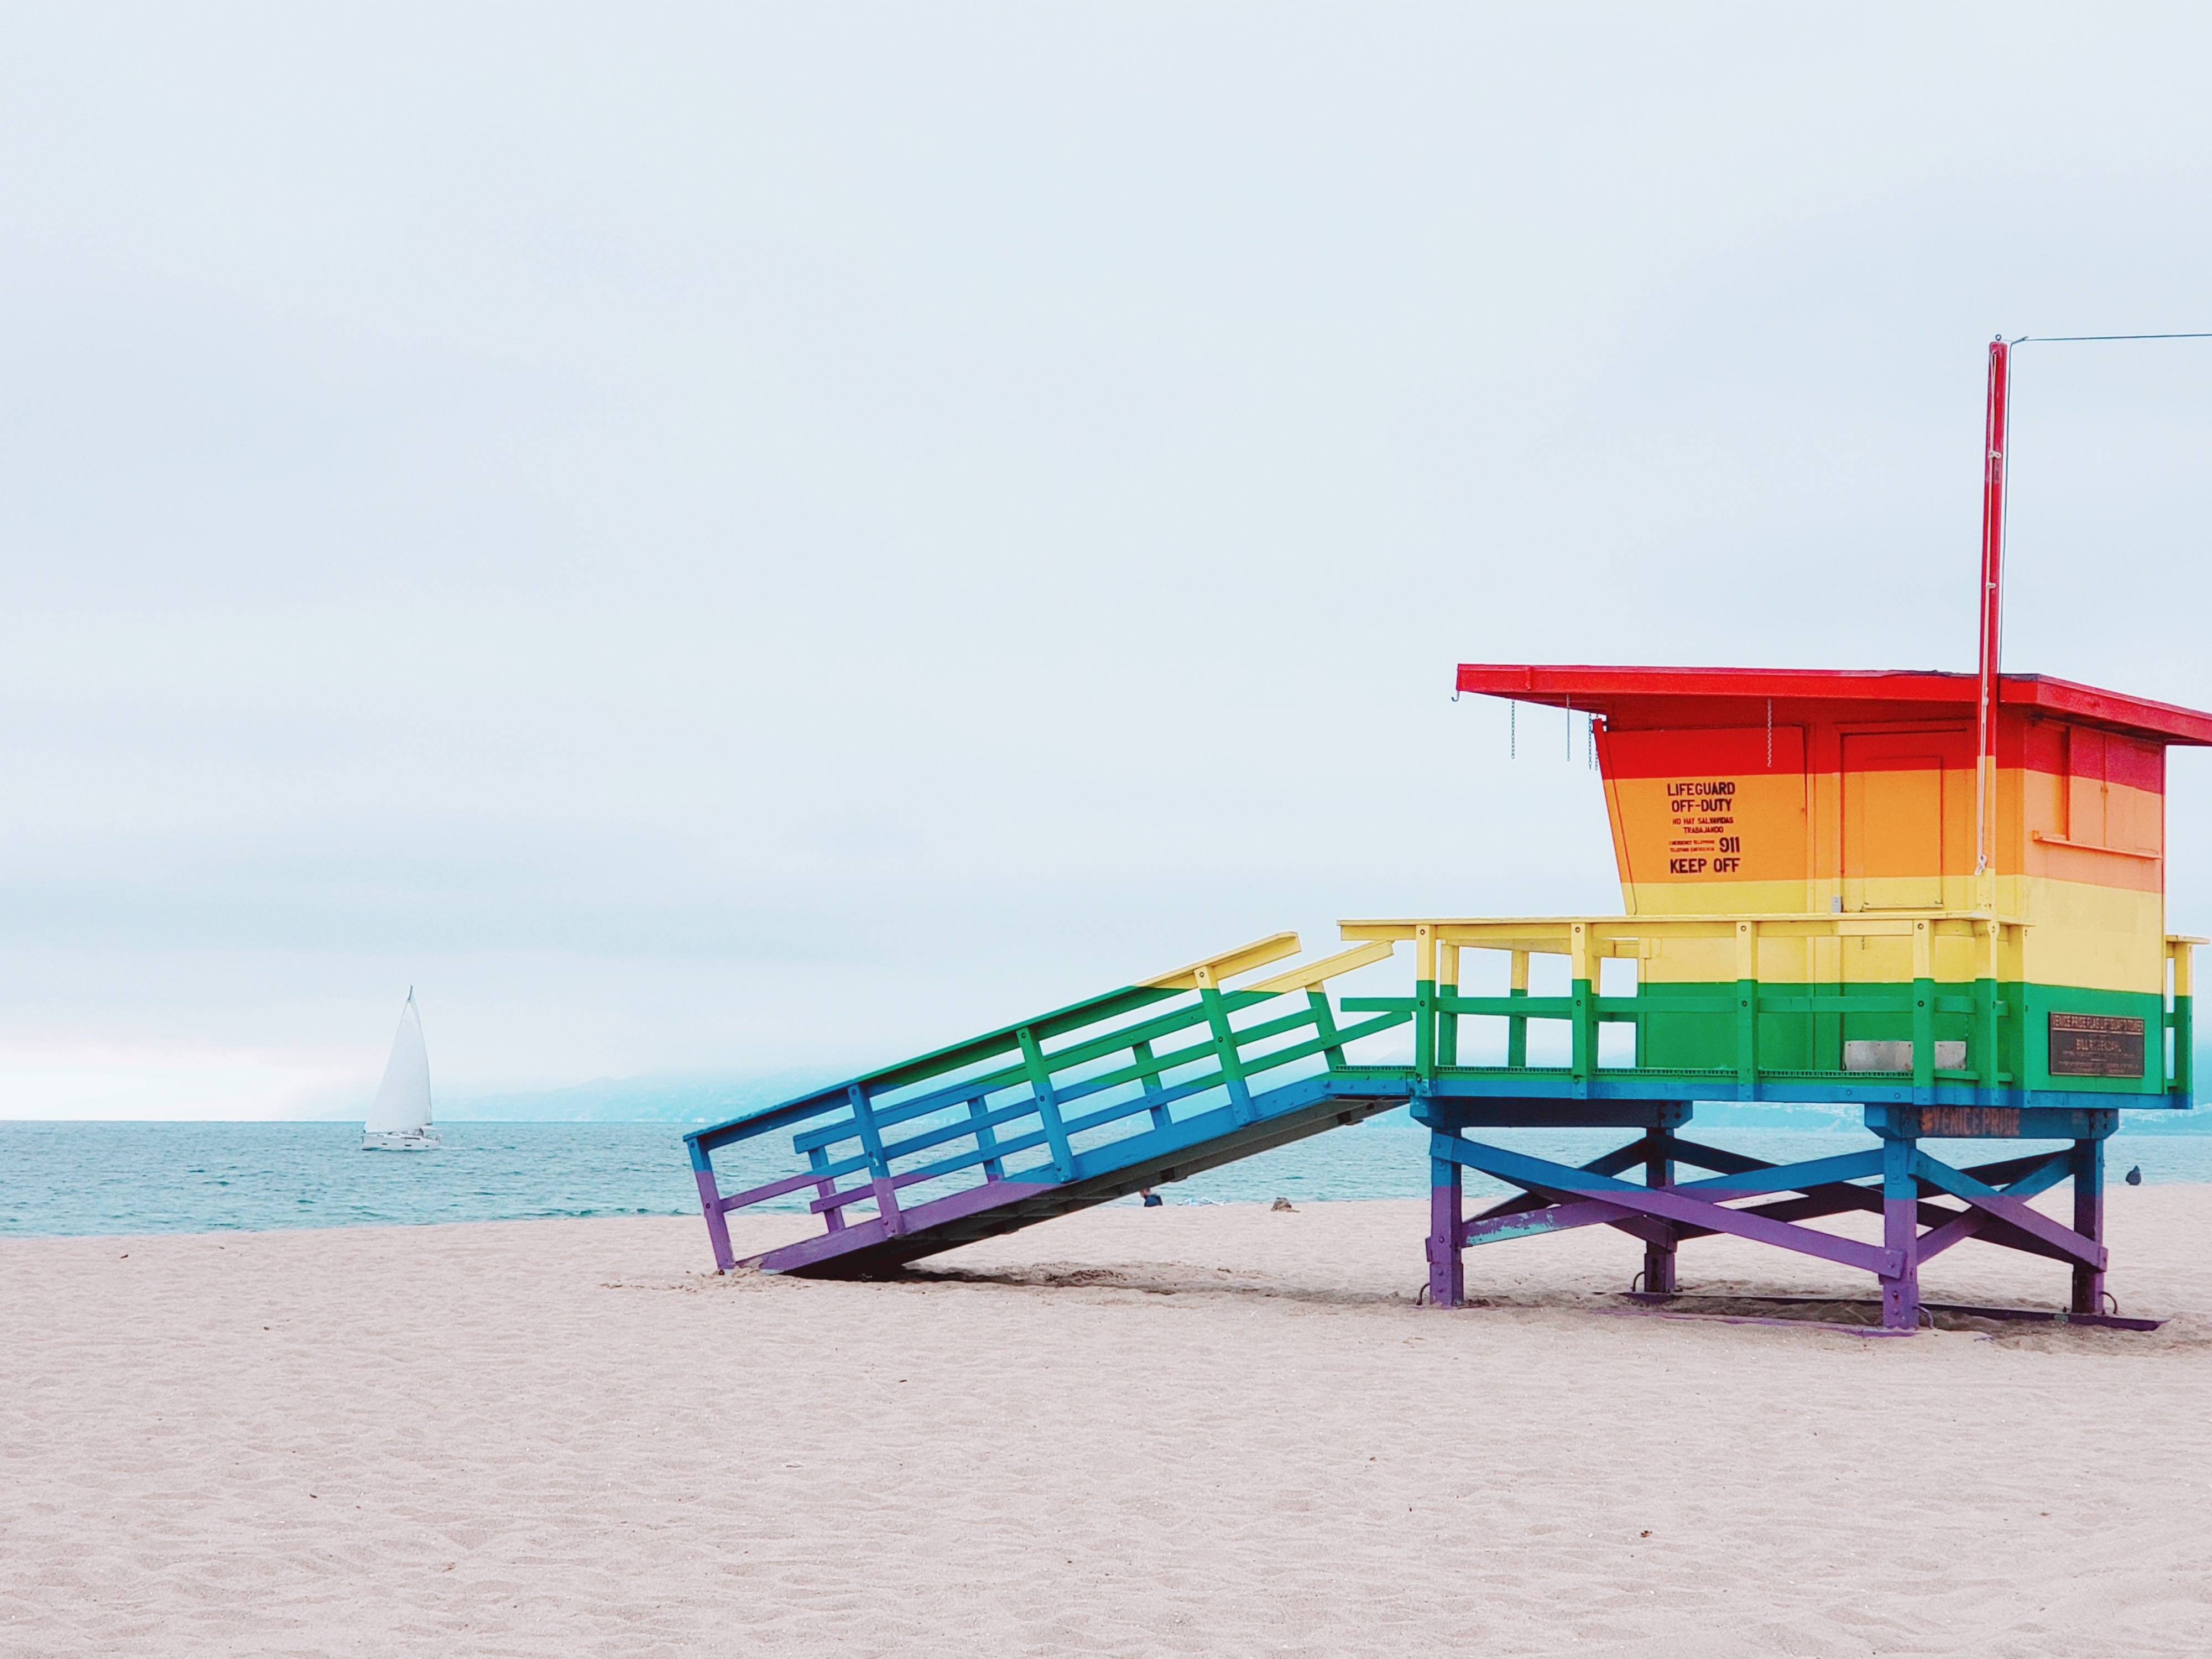 #beachday #rainbow #calilife #myoriginalphoto #socallife #beach #sand #boat #ocean #venicebeach #california #colorpop #photoshoot #pride 